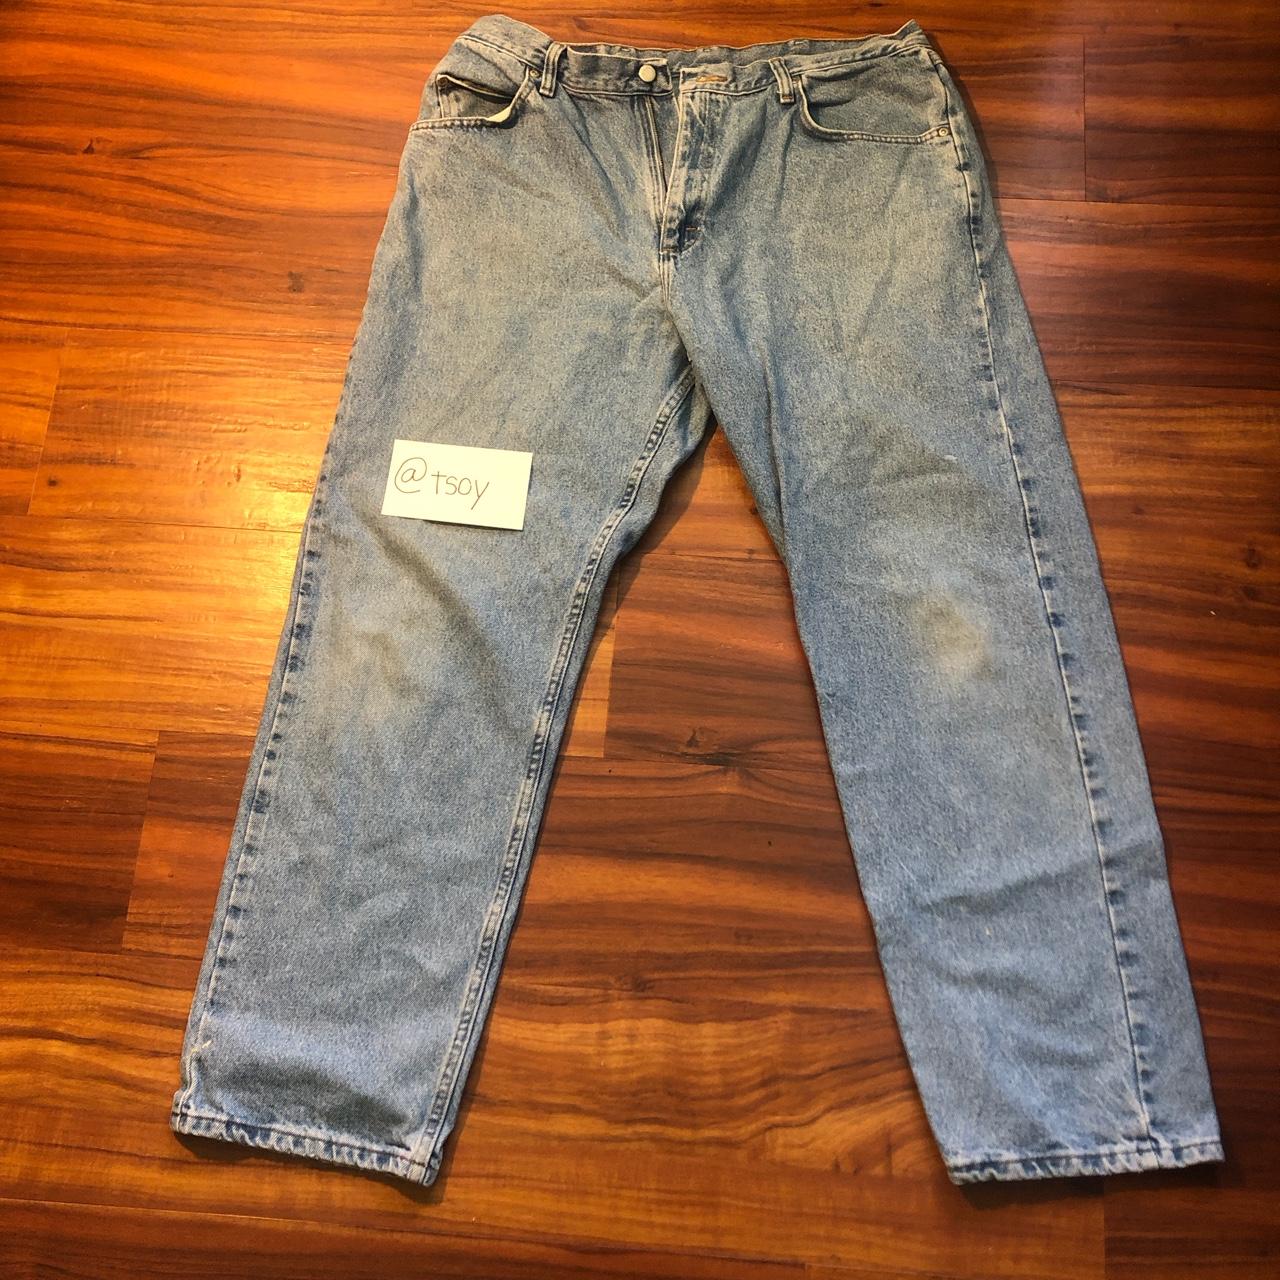 Almost brand new 38•32 wrangler jeans in great... - Depop